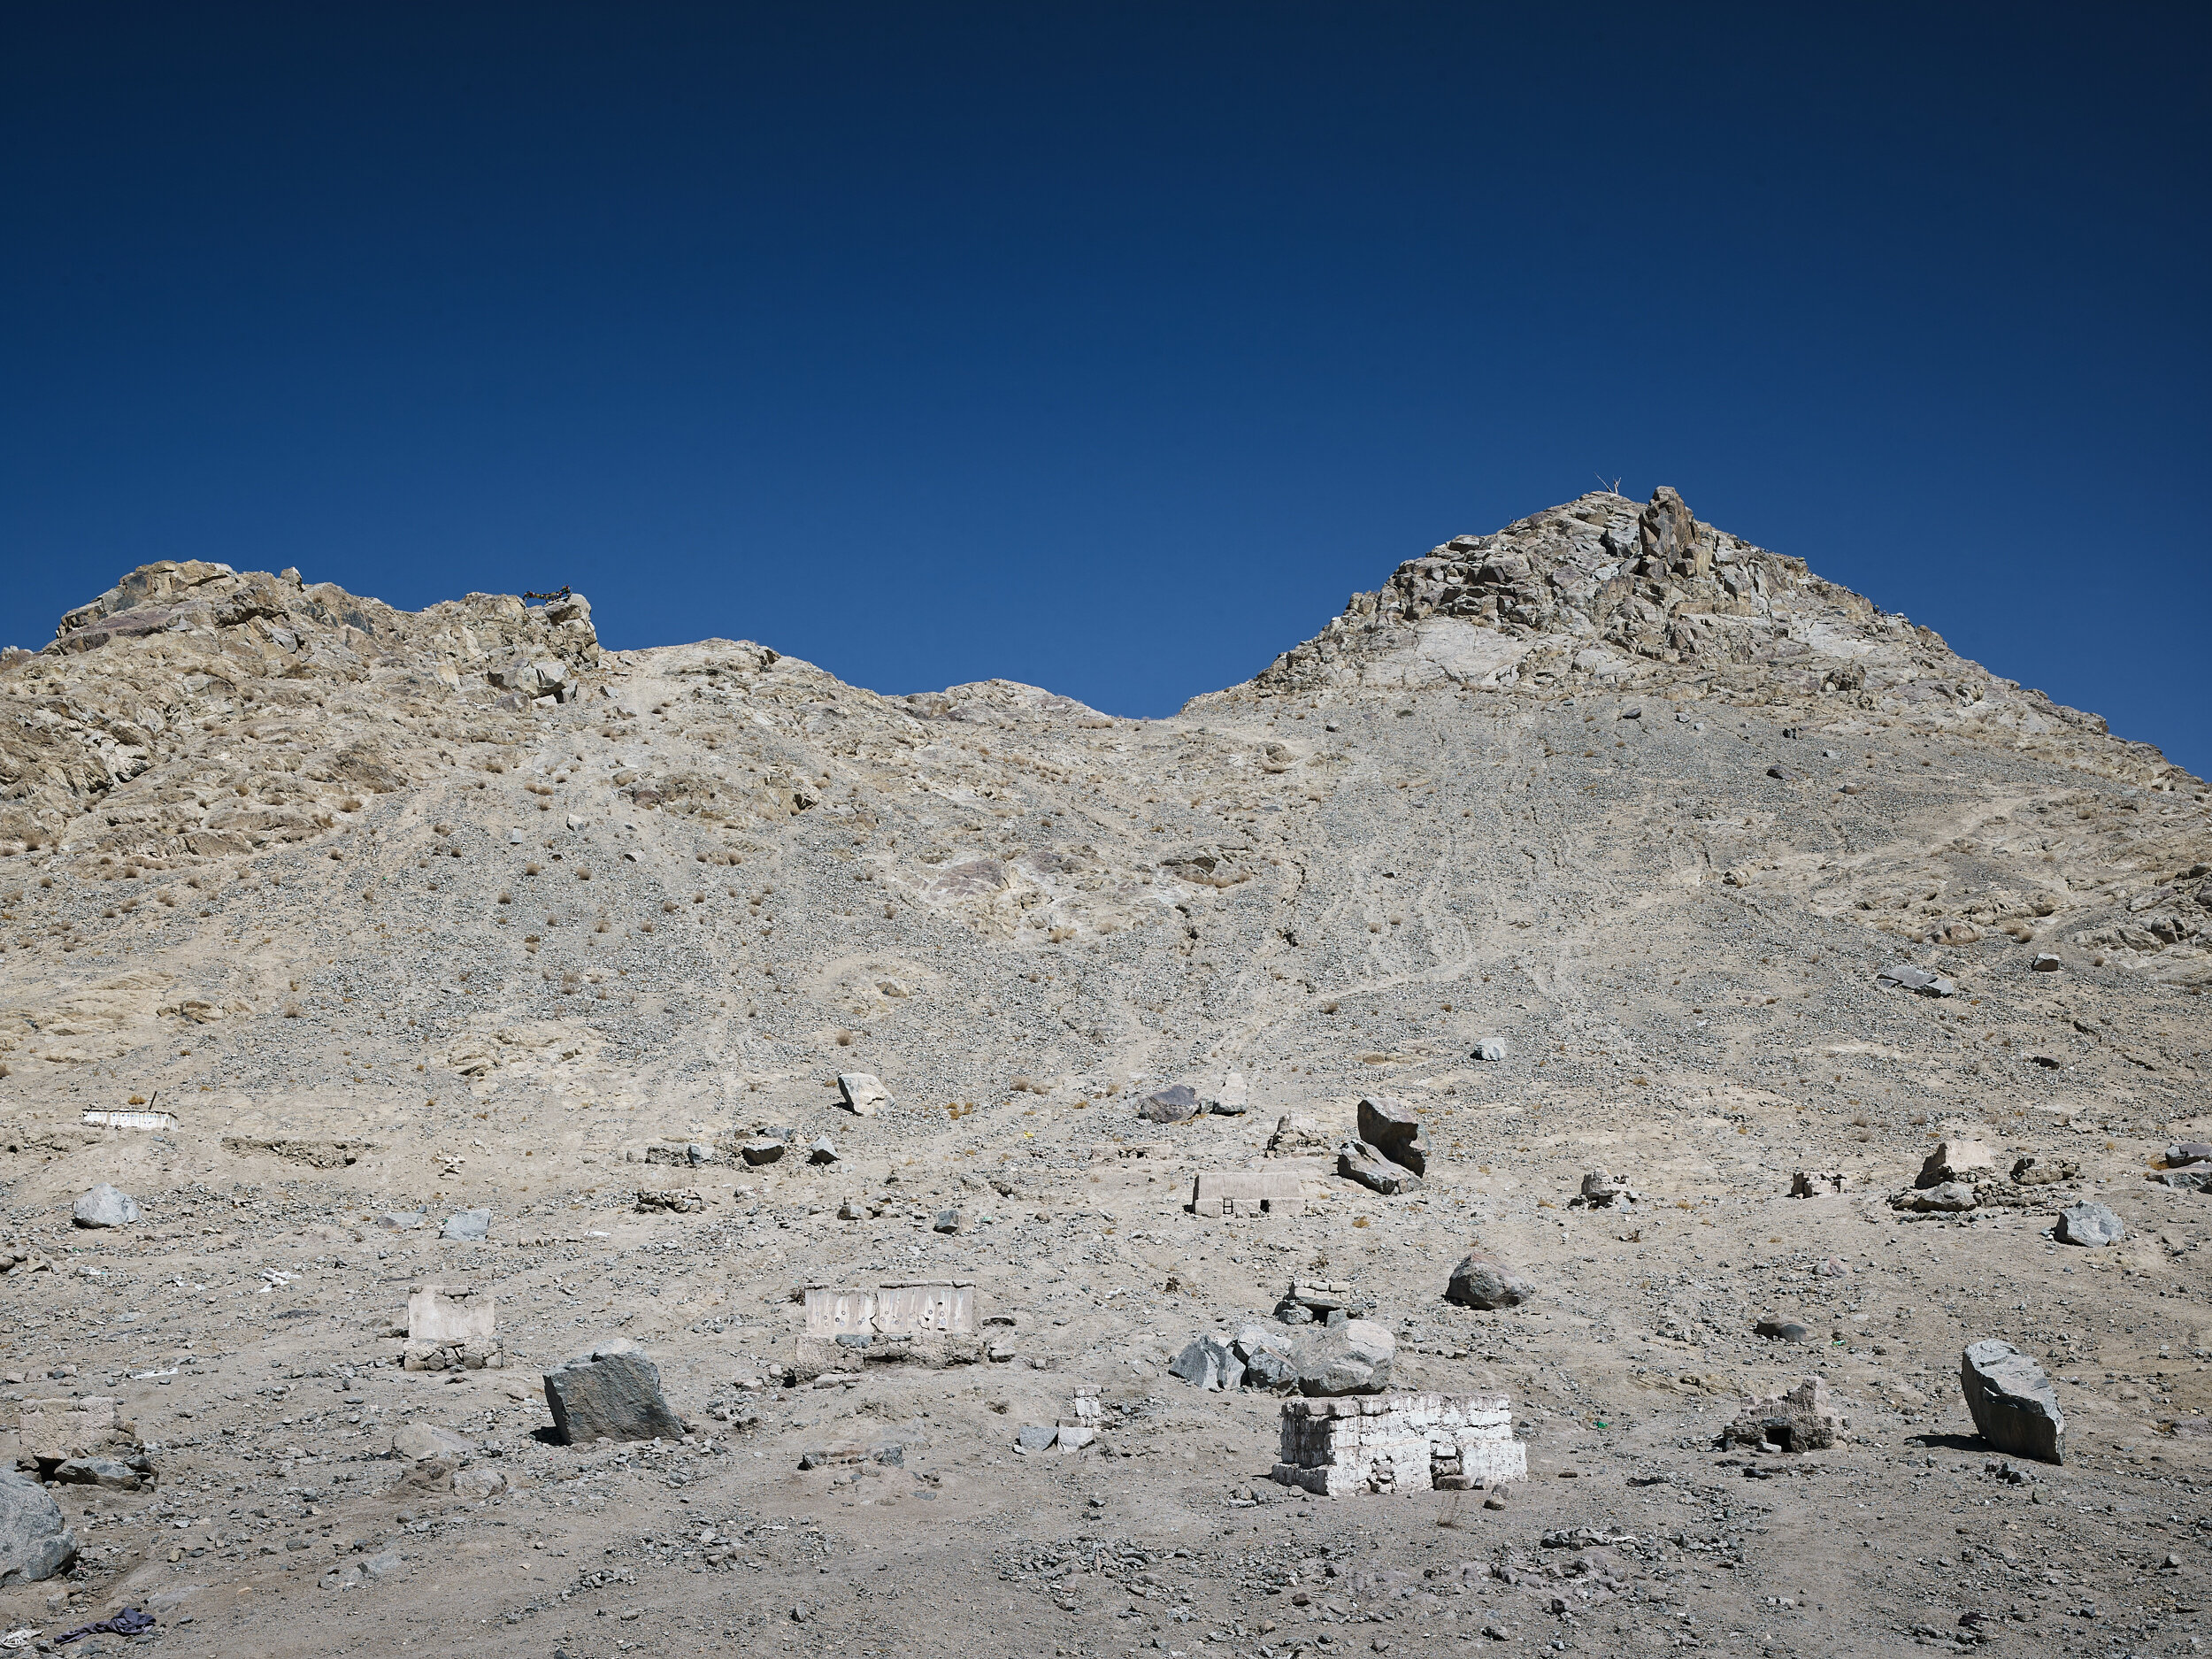  sand 41, Ladakh, India, 2018 